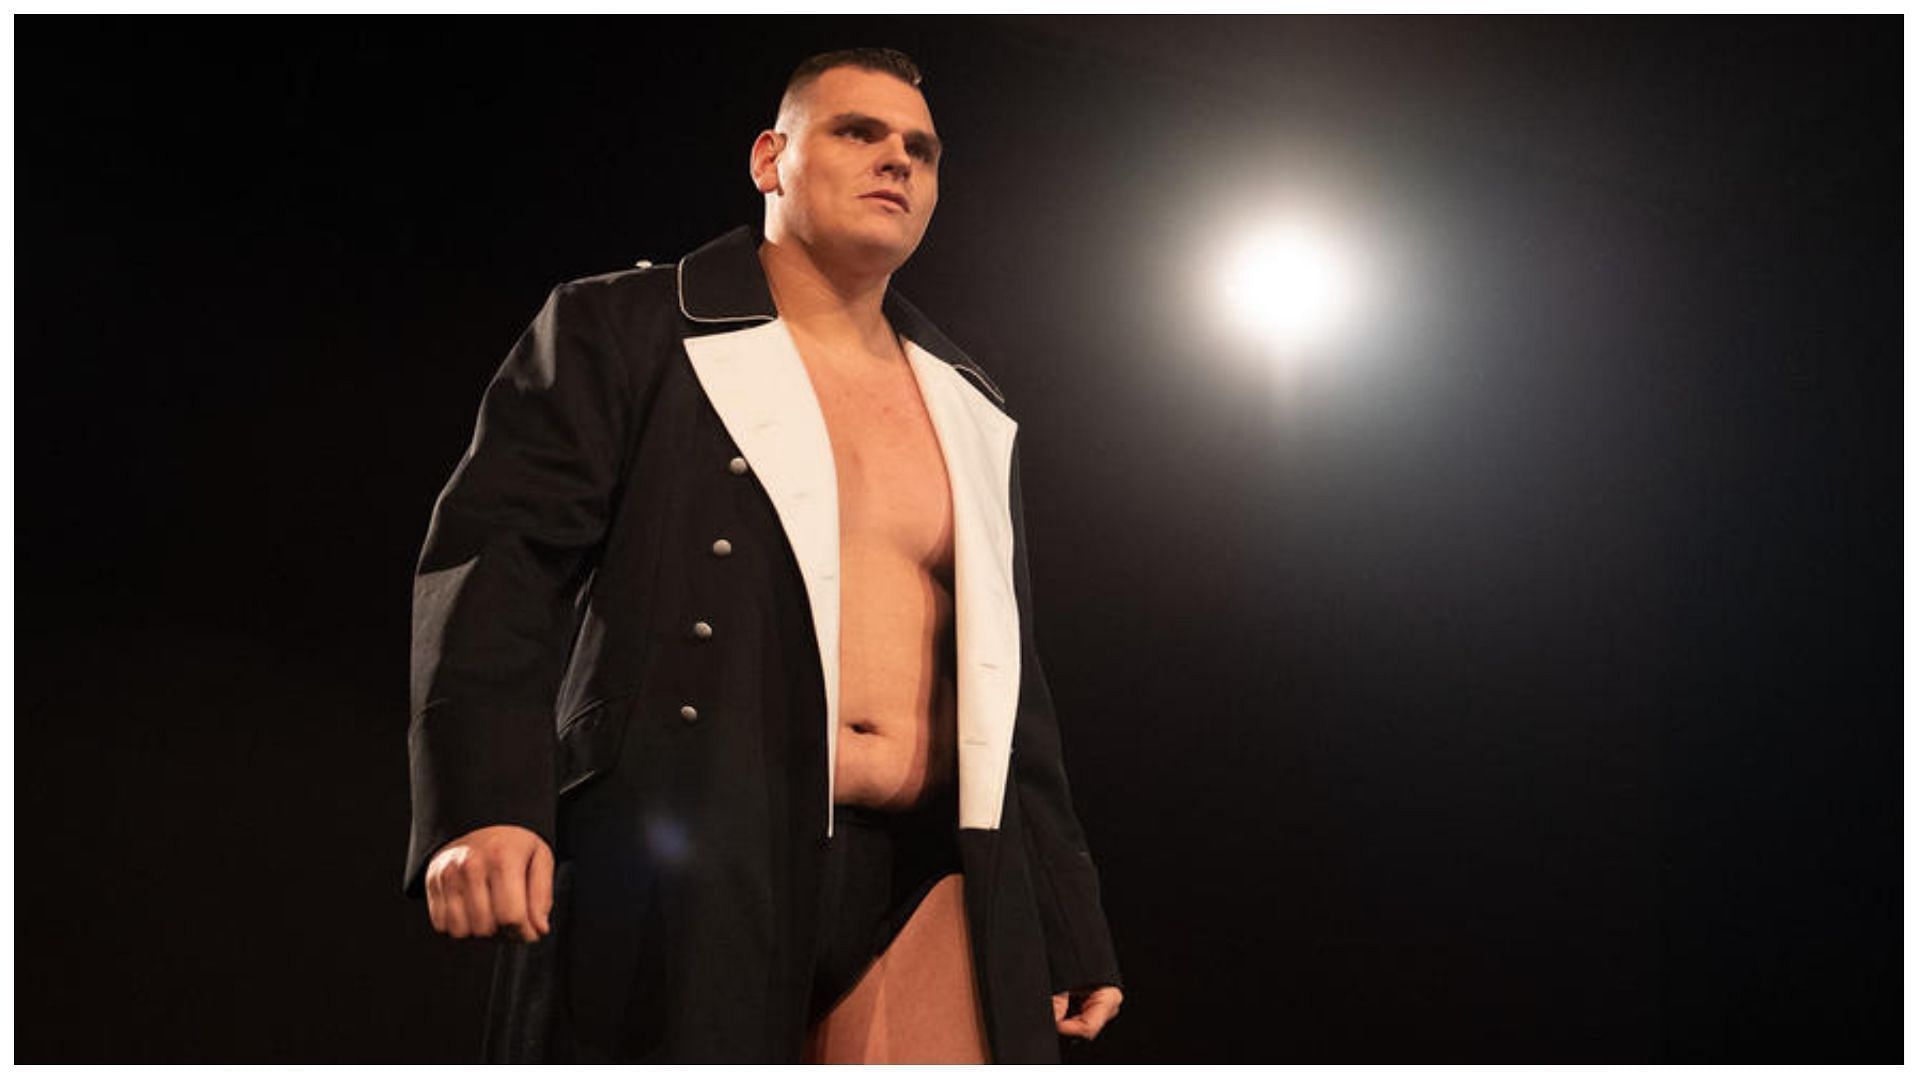 Current WWE Intercontinental Champion Gunther